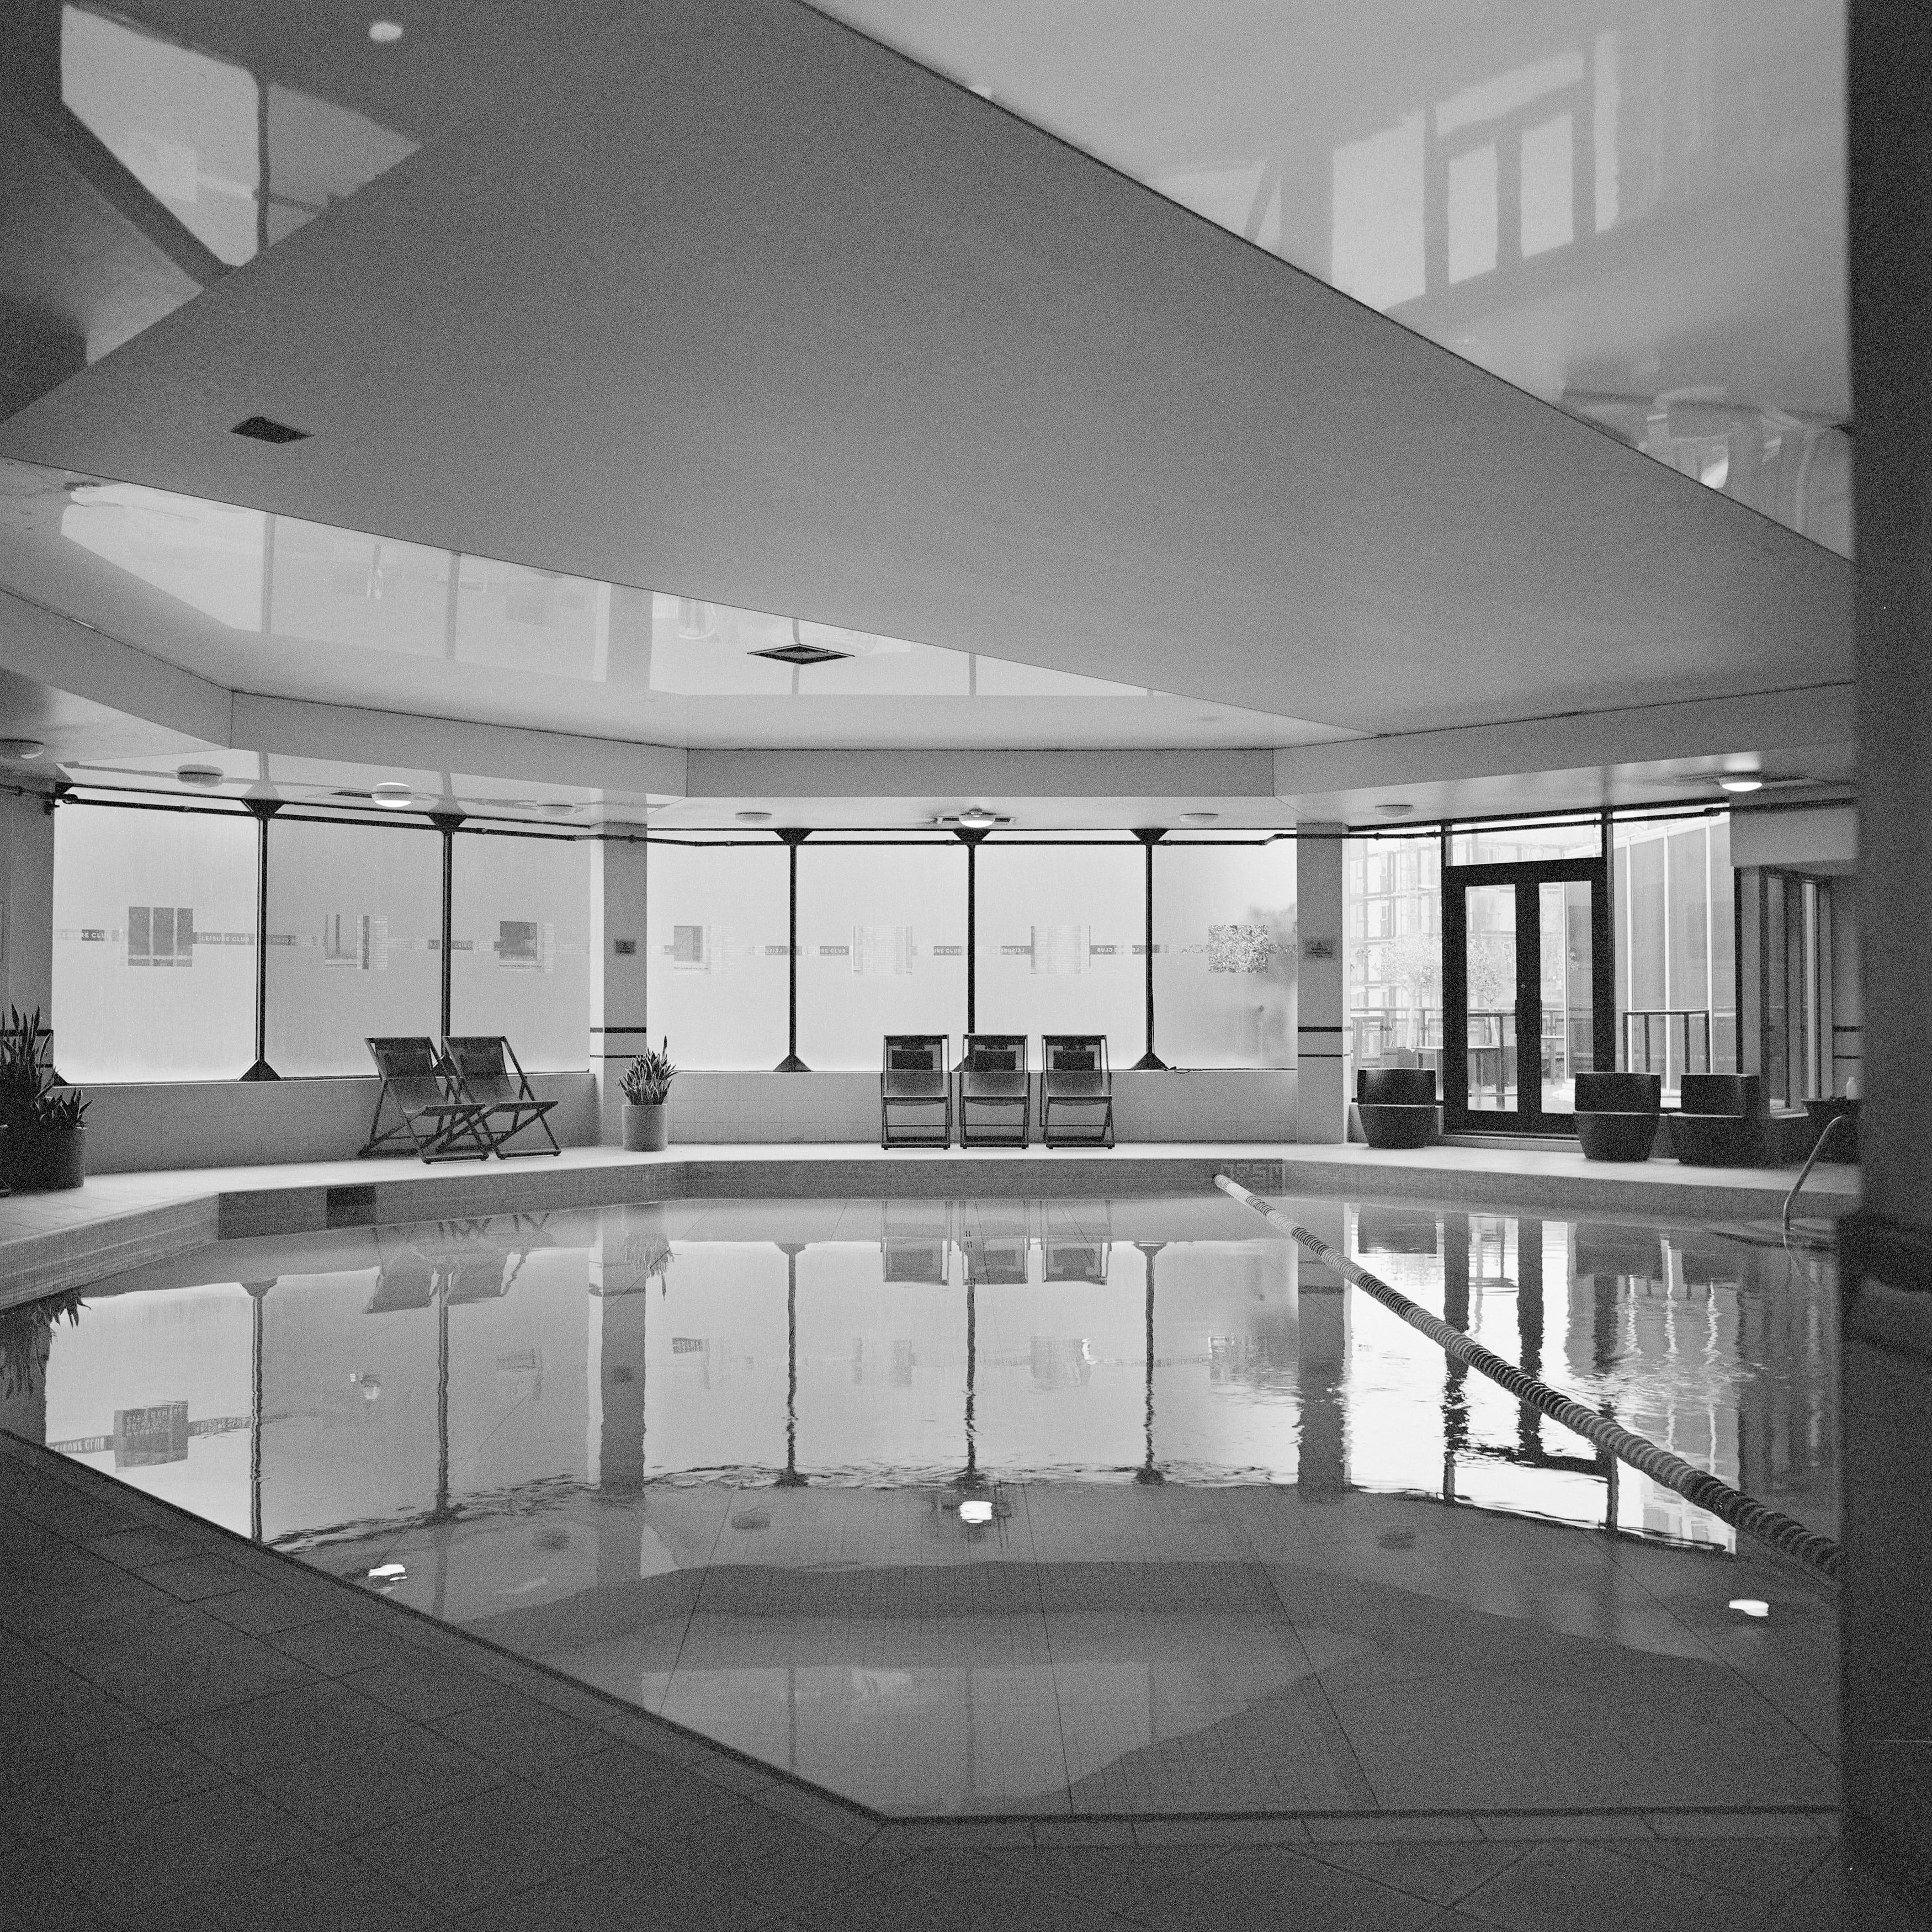 Geometric Architectural Photo: Black & White Square Pool Captured on Film